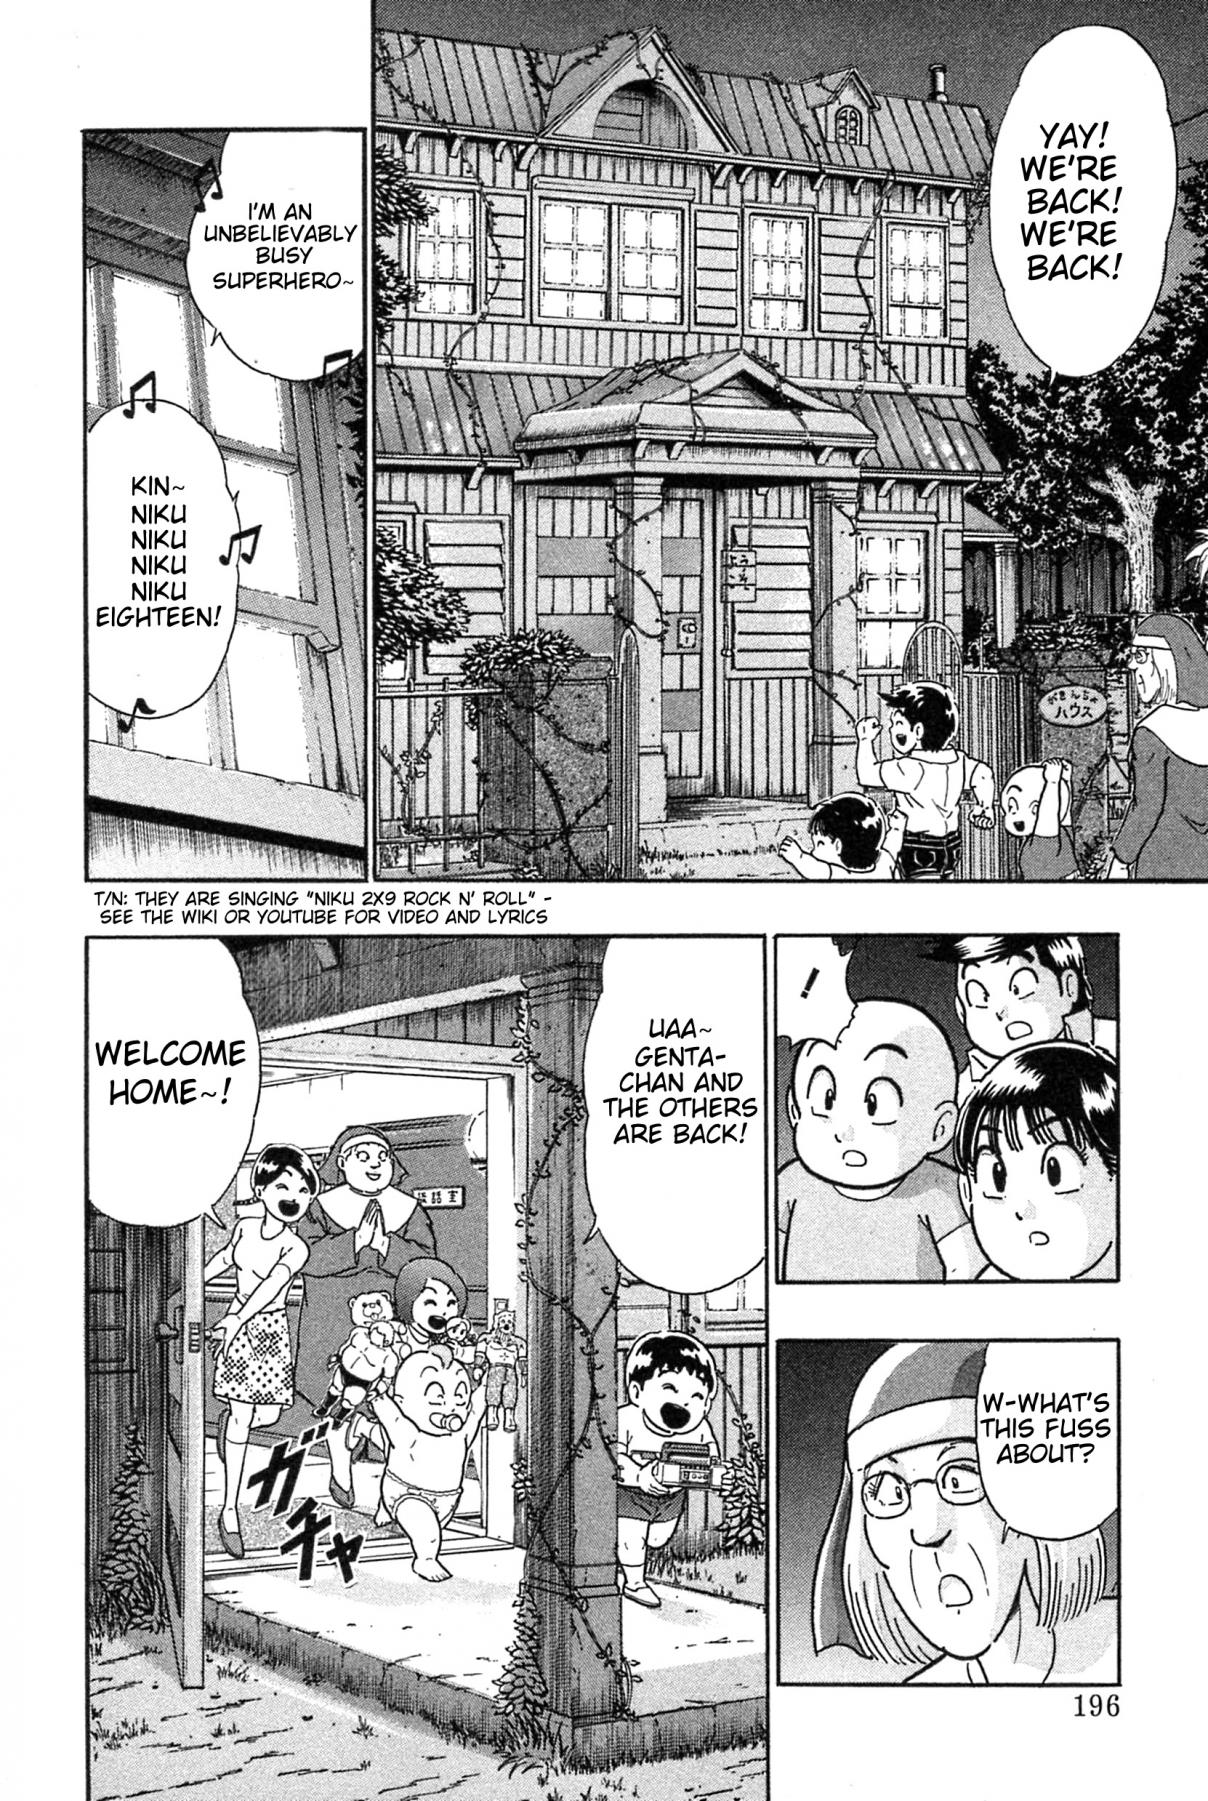 Kinnikuman Nisei: Ultimate Choujin Tag Vol. 17 Ch. 187 Visitors at Gakincho House!